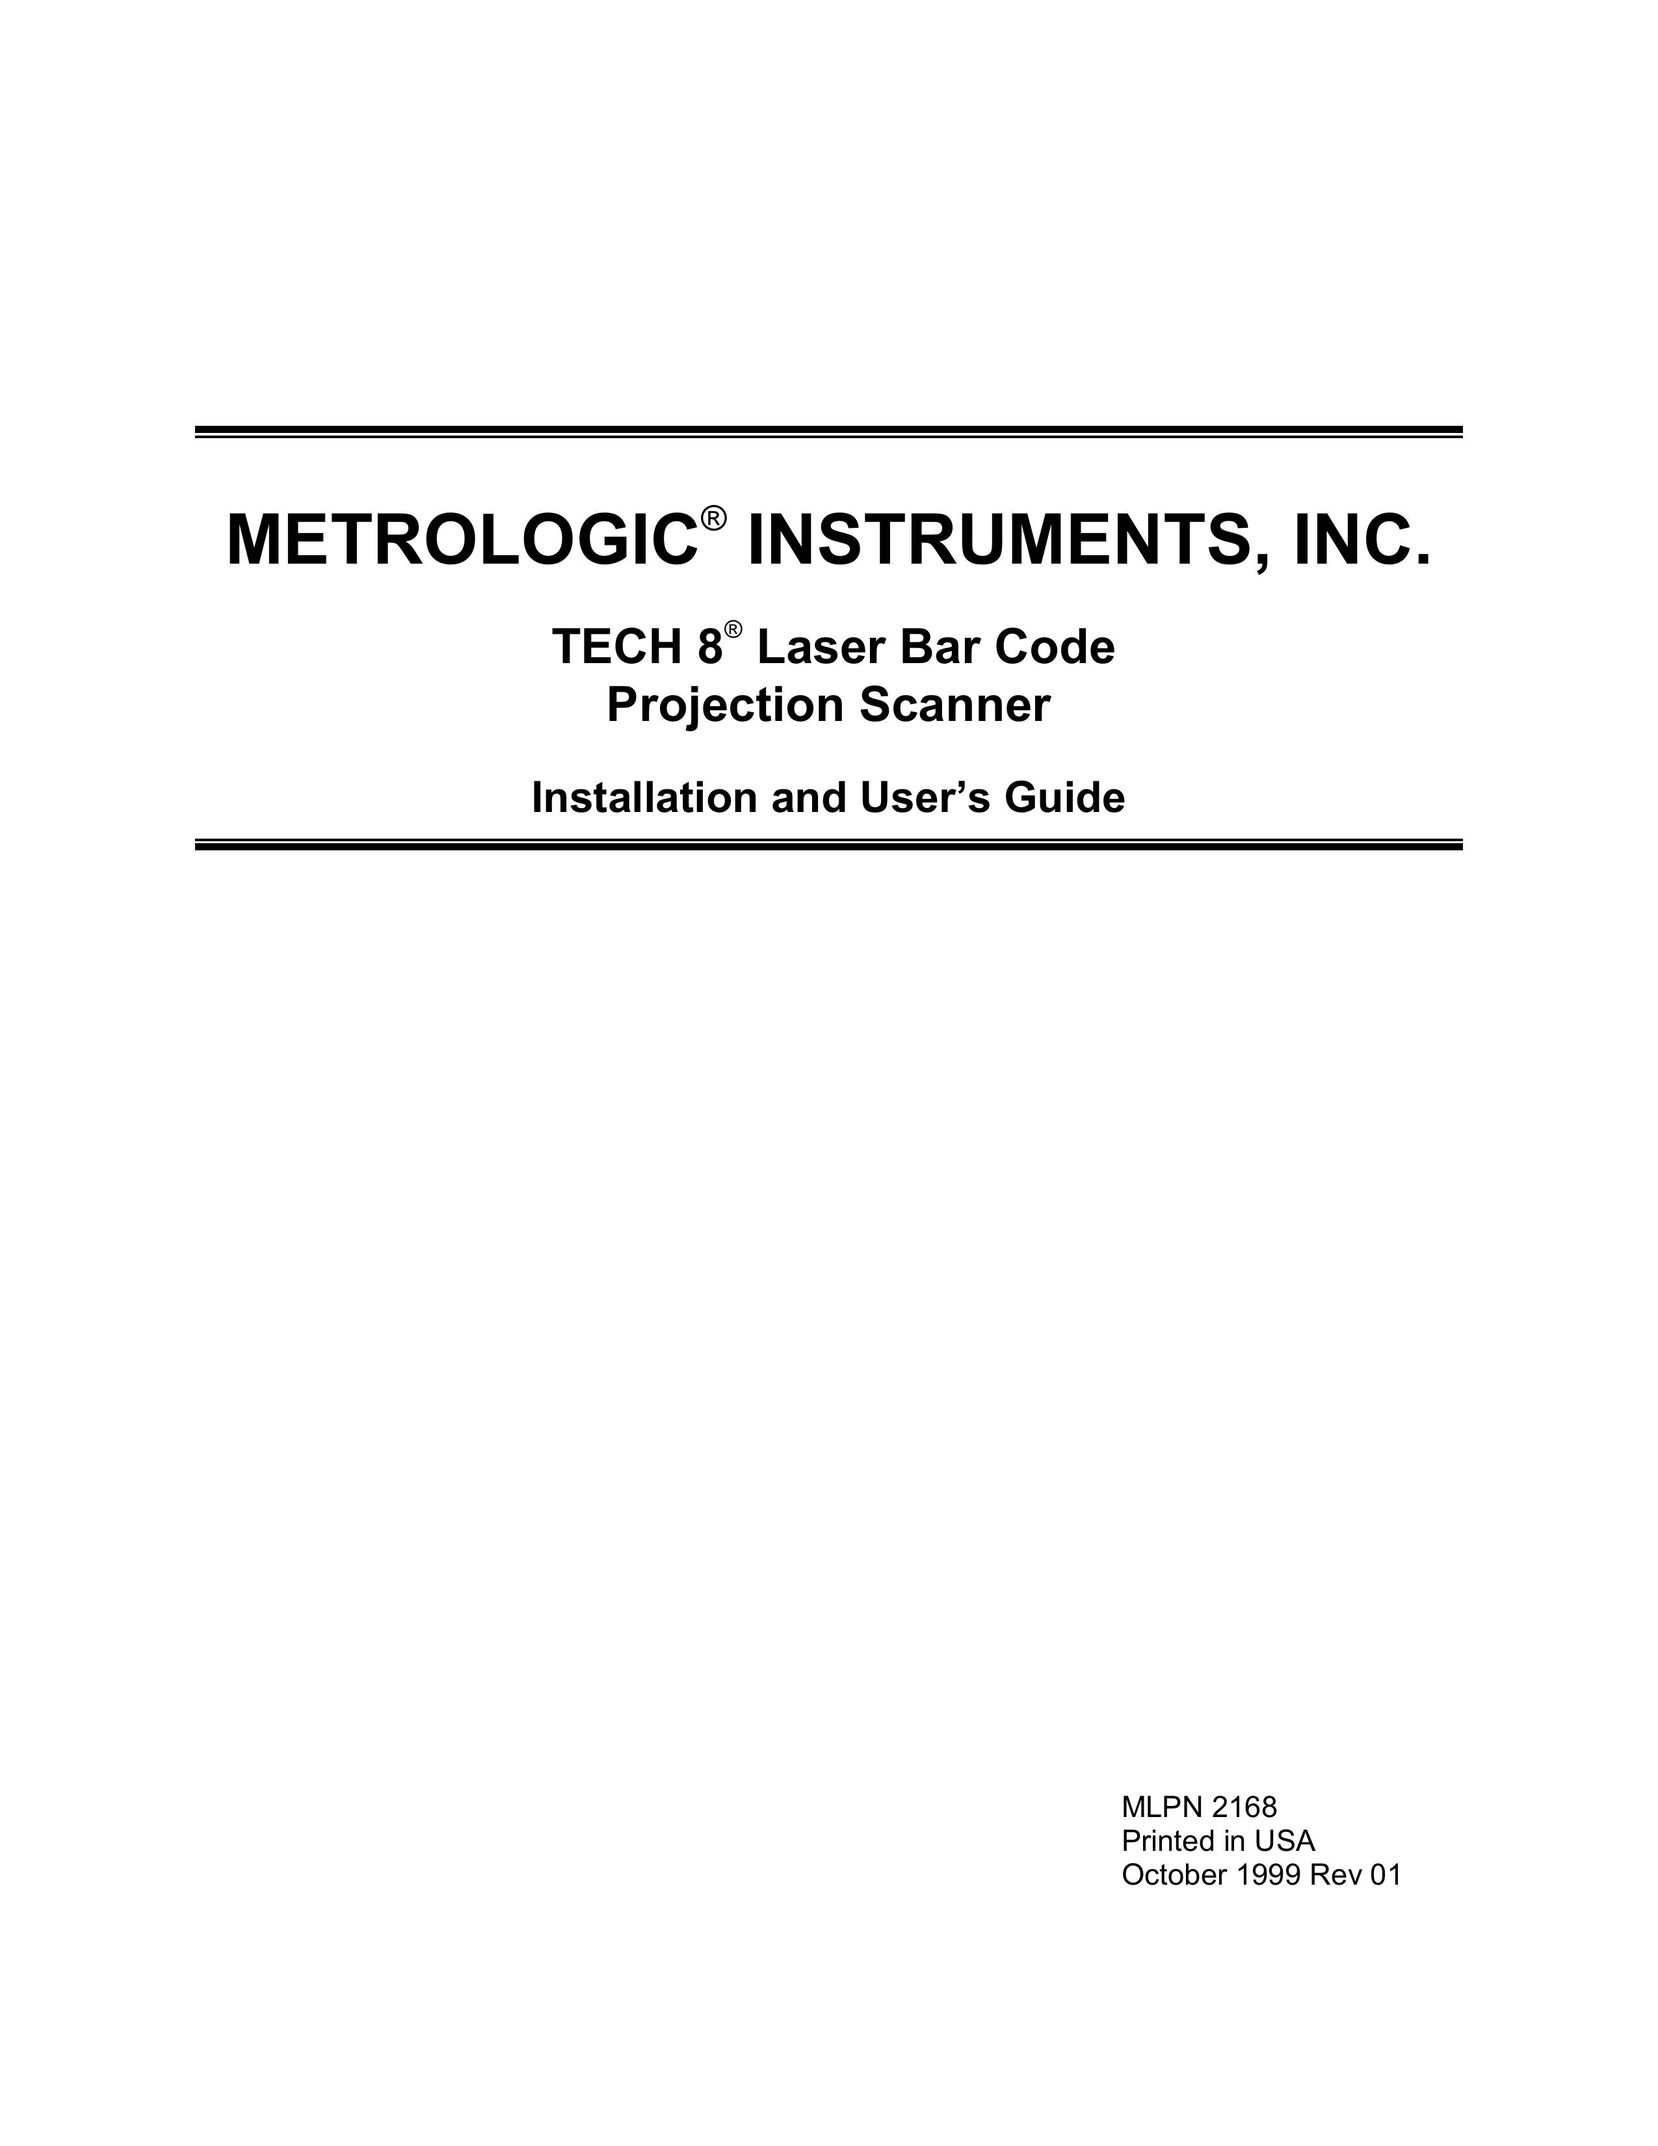 Metrologic Instruments MLPN 2168 Barcode Reader User Manual